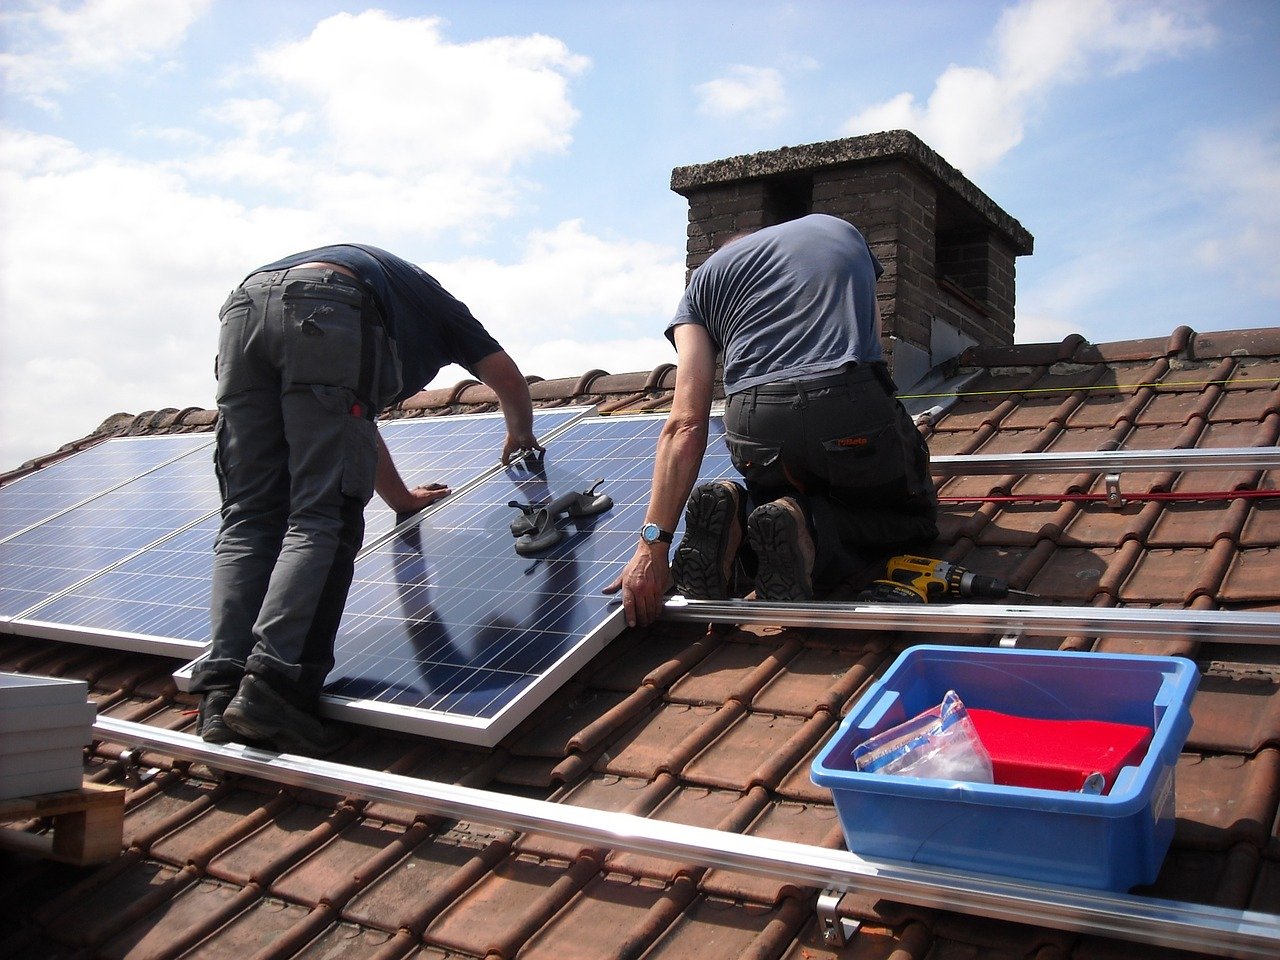 Lakeland Solar Panel Professionals supplied photo